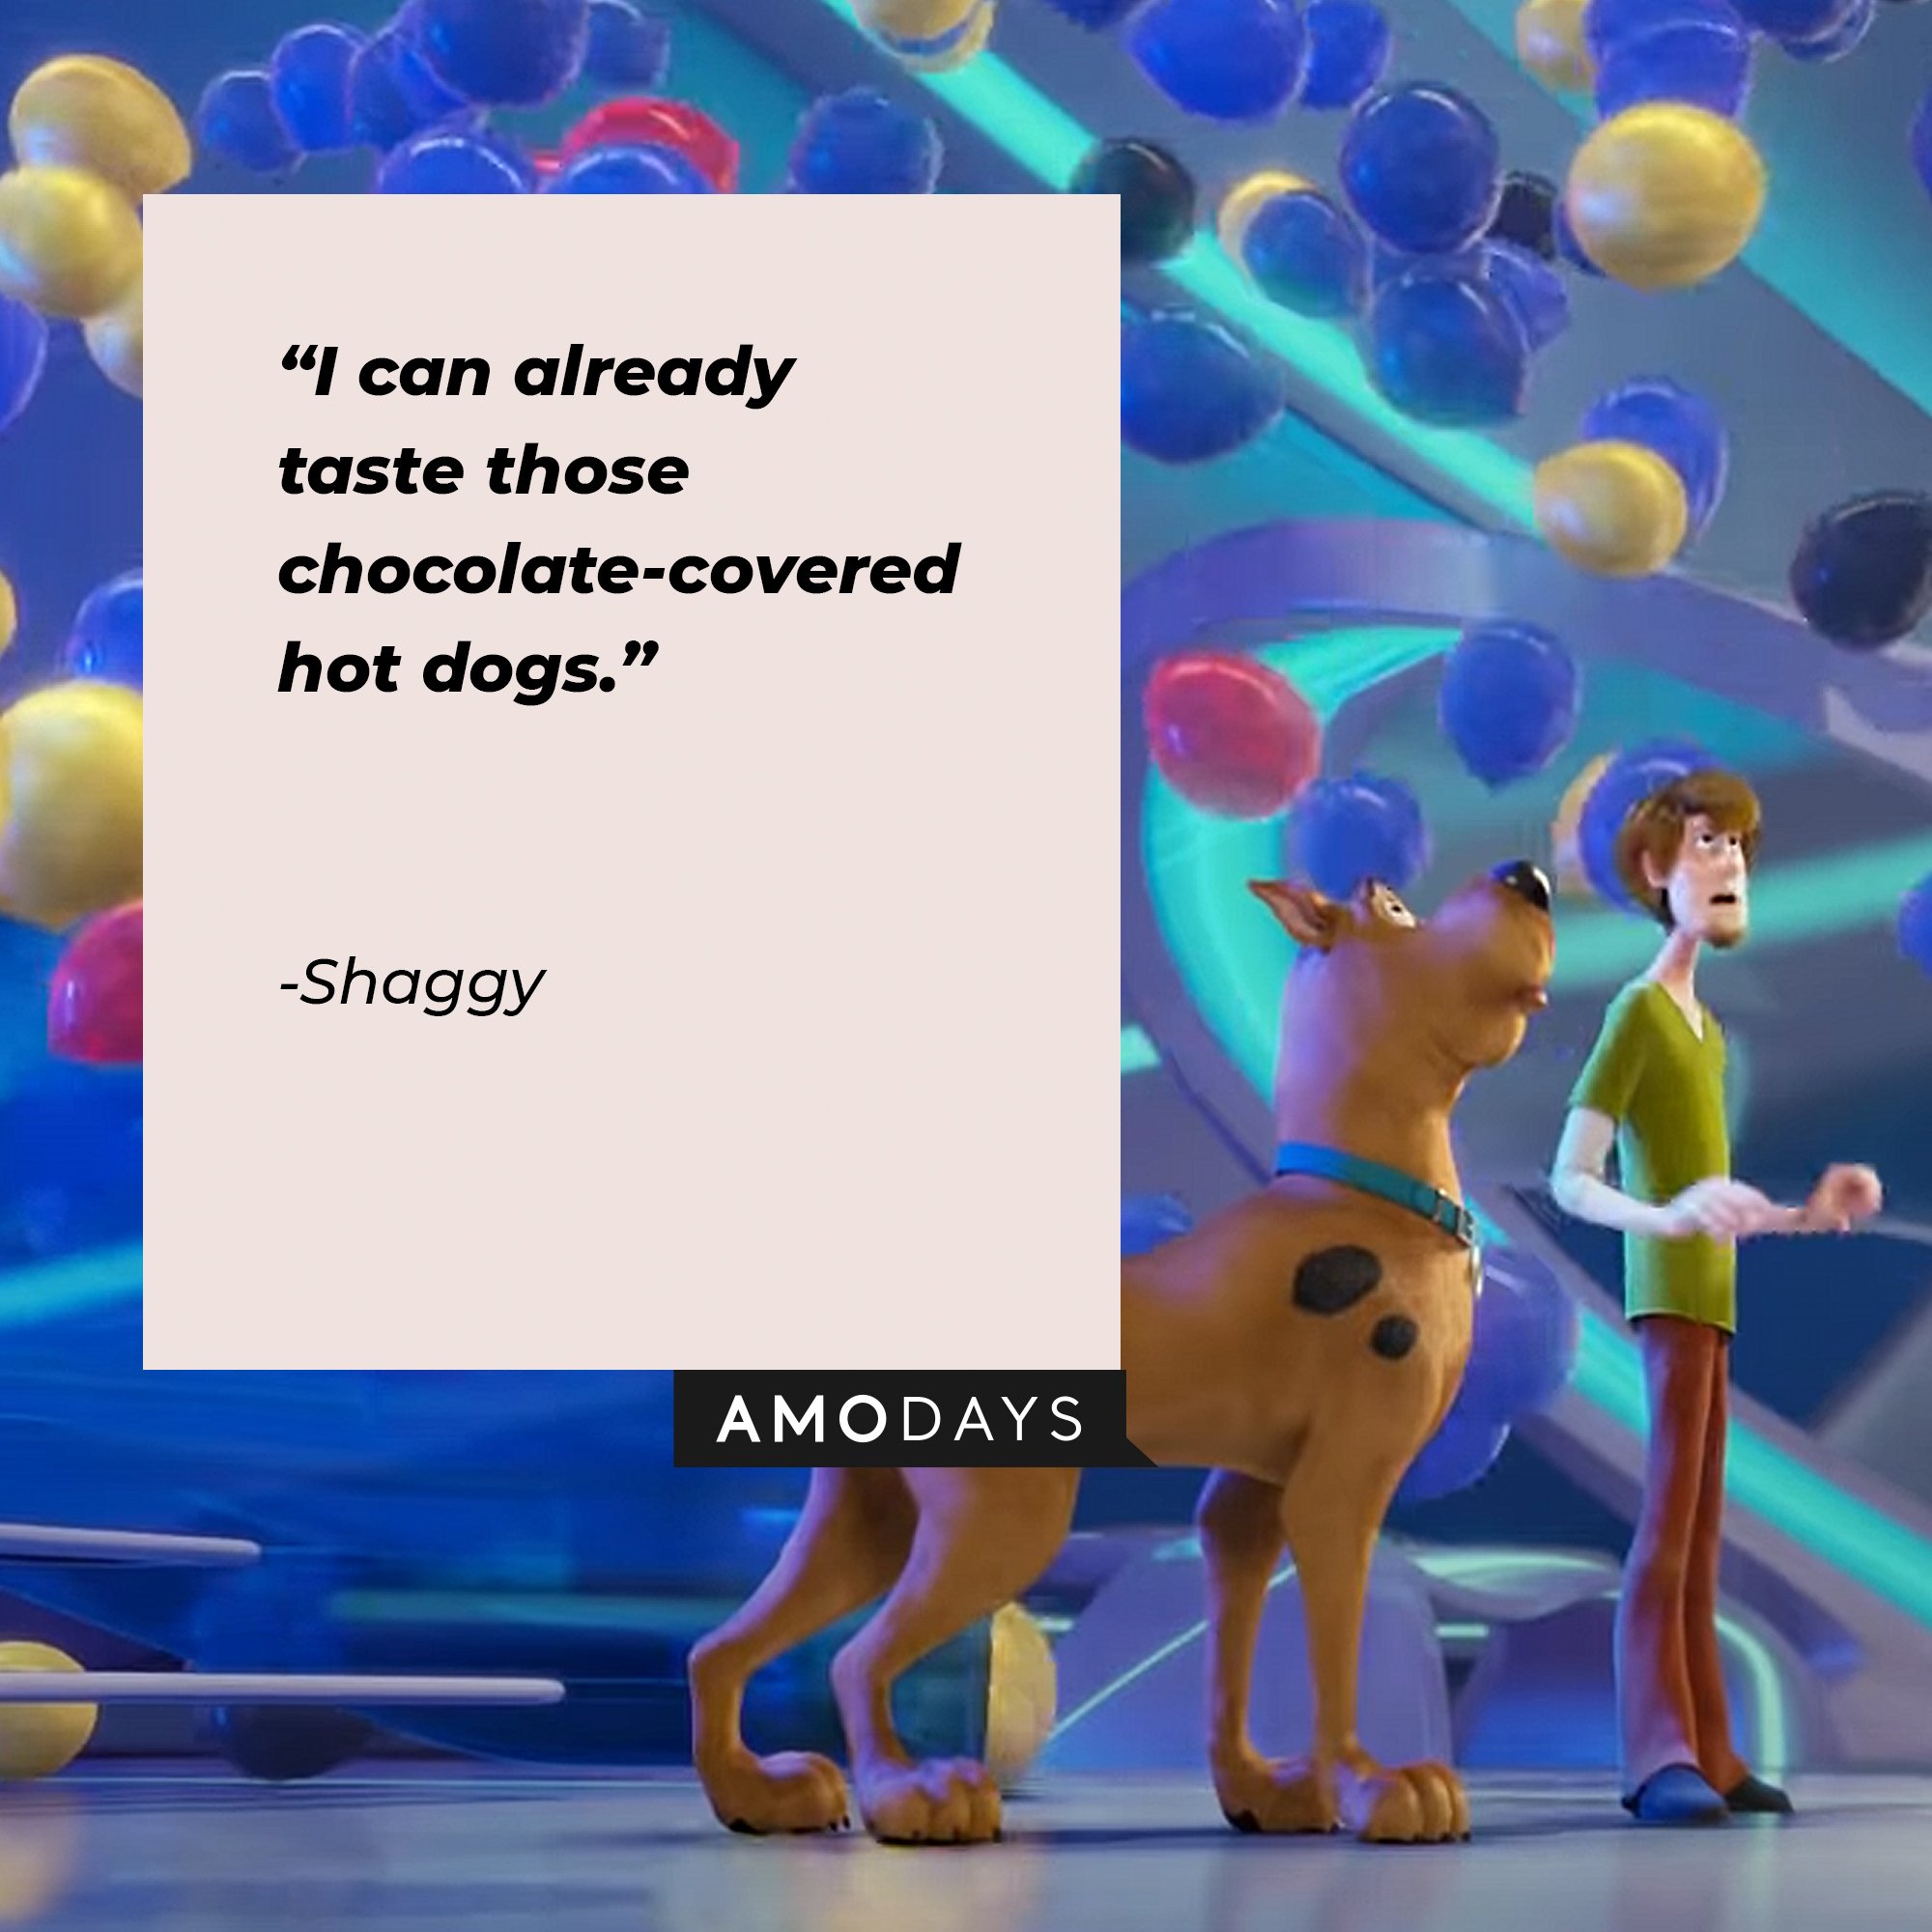 Shaggy: “I can already taste those chocolate-covered hot dogs.” | Image: AmoDays